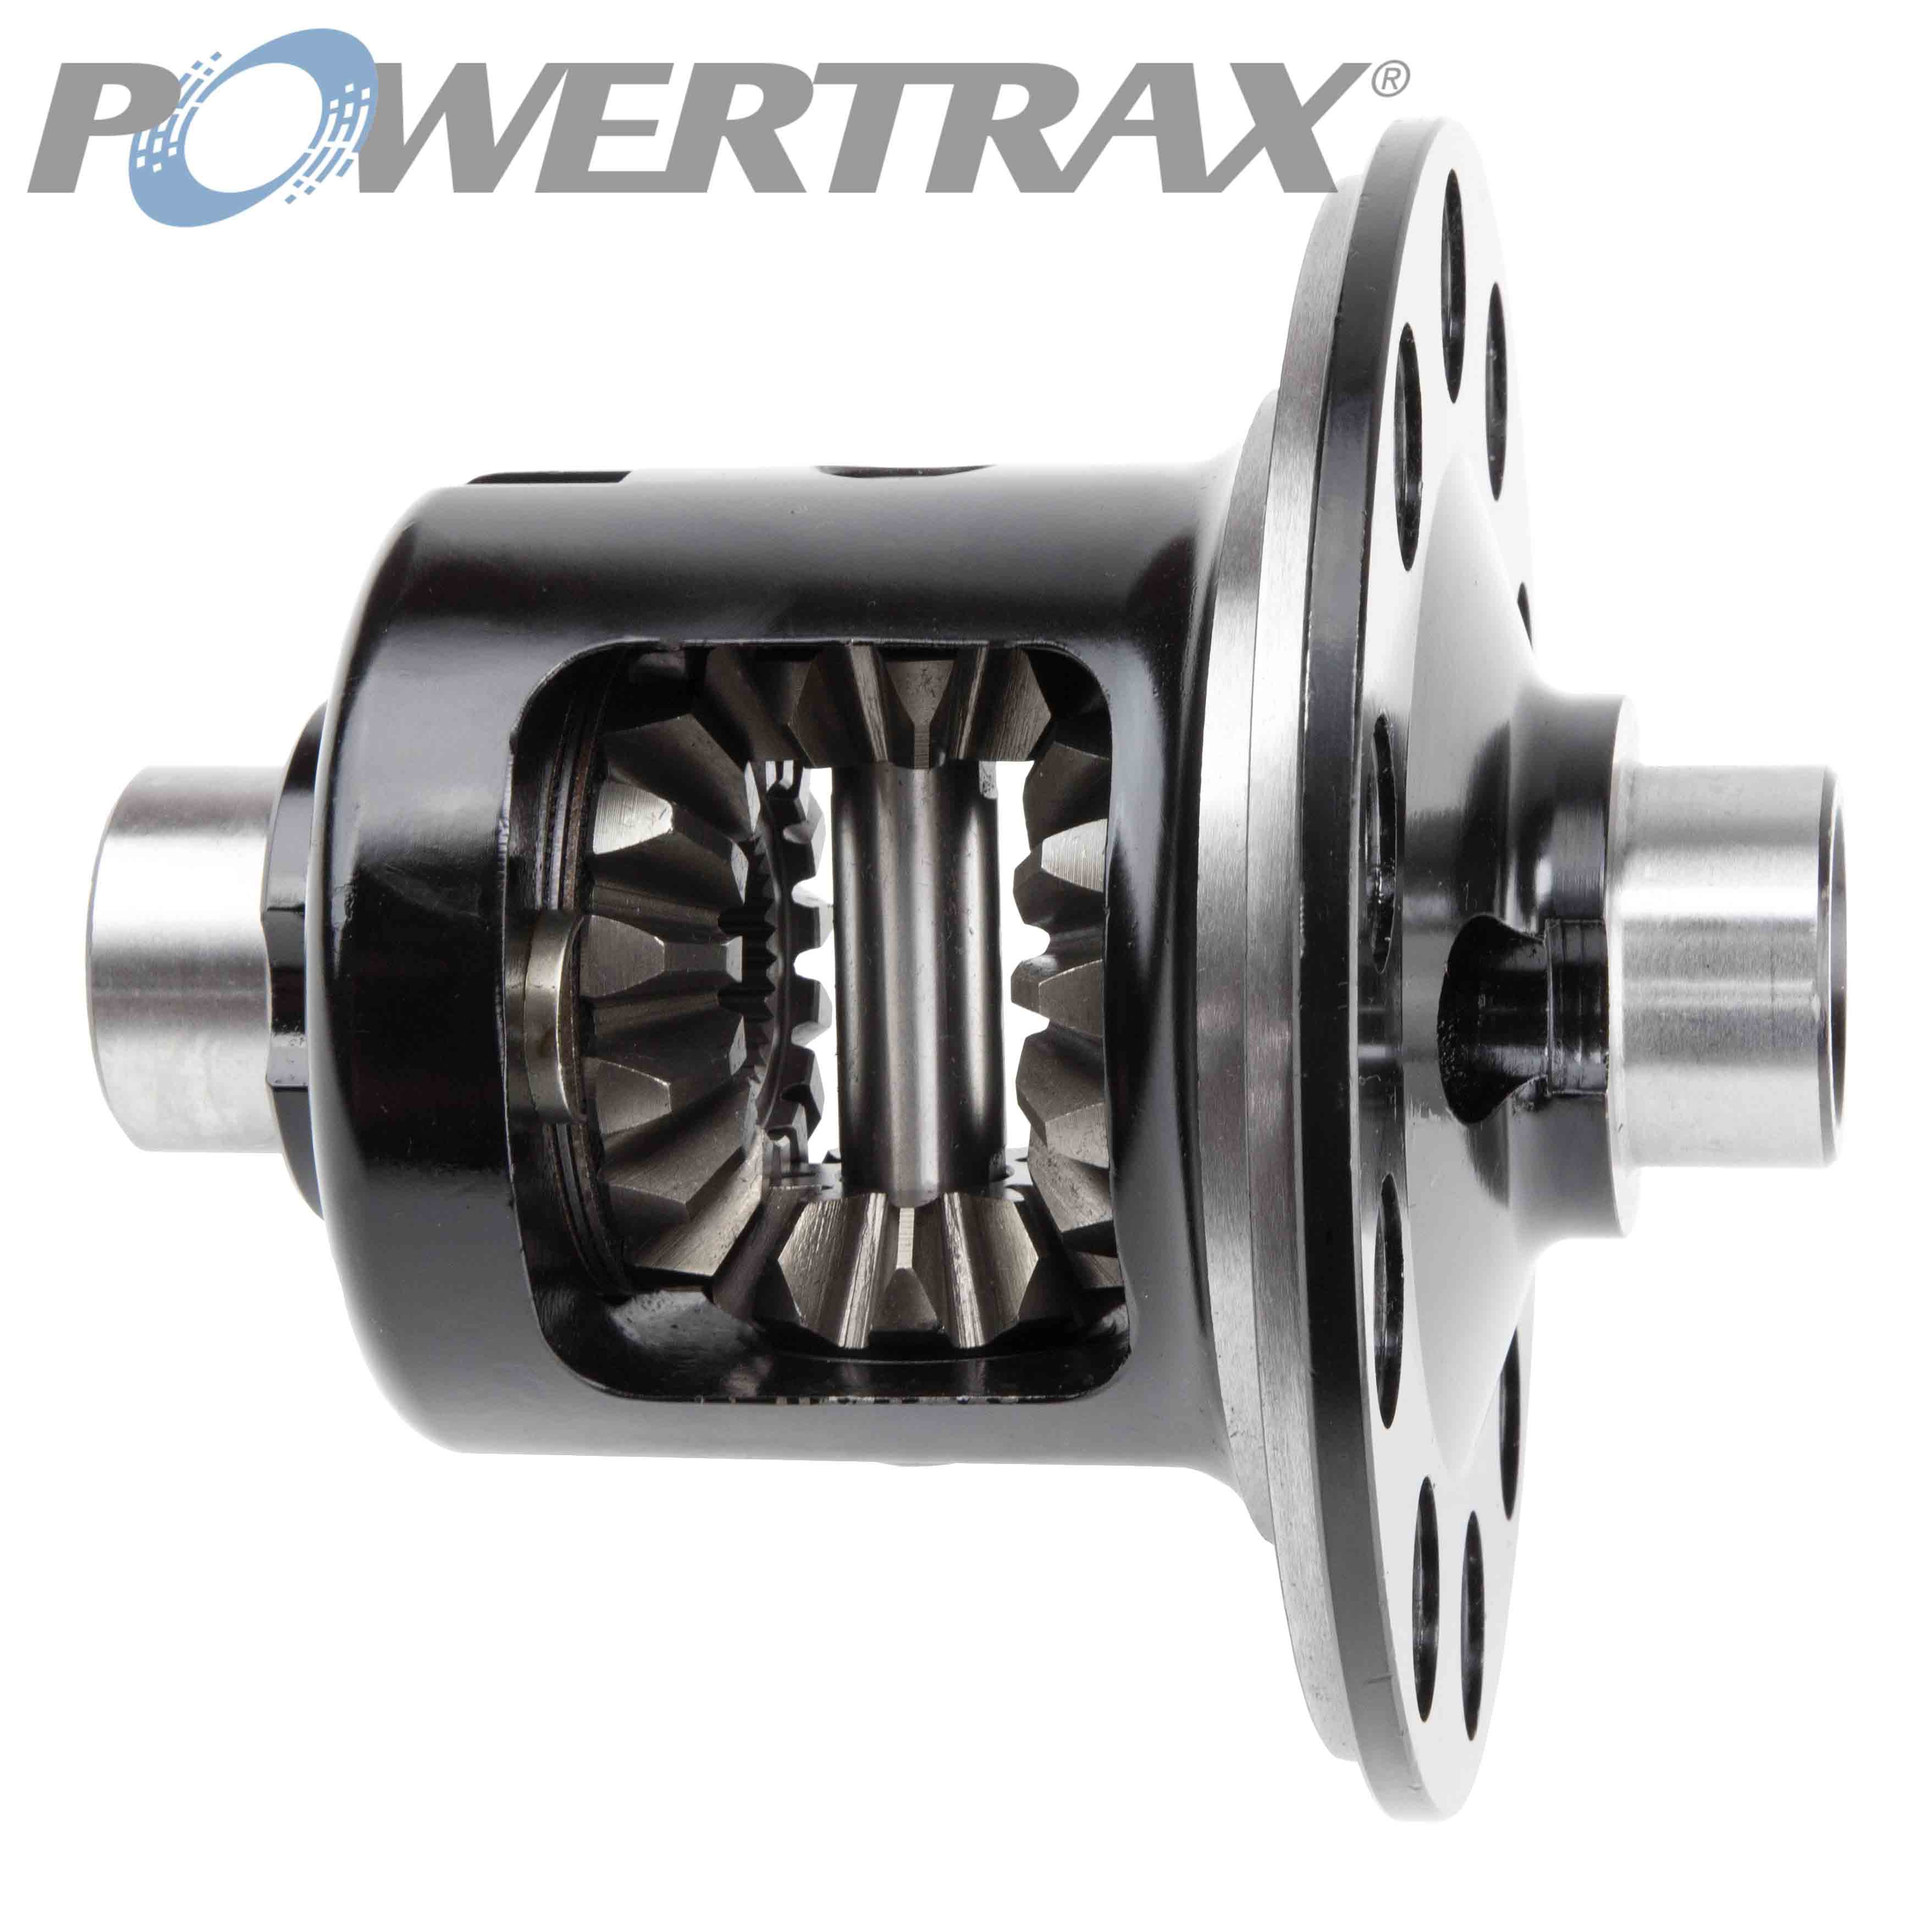 PowerTrax LS308229 Powertrax - Grip LS Traction System